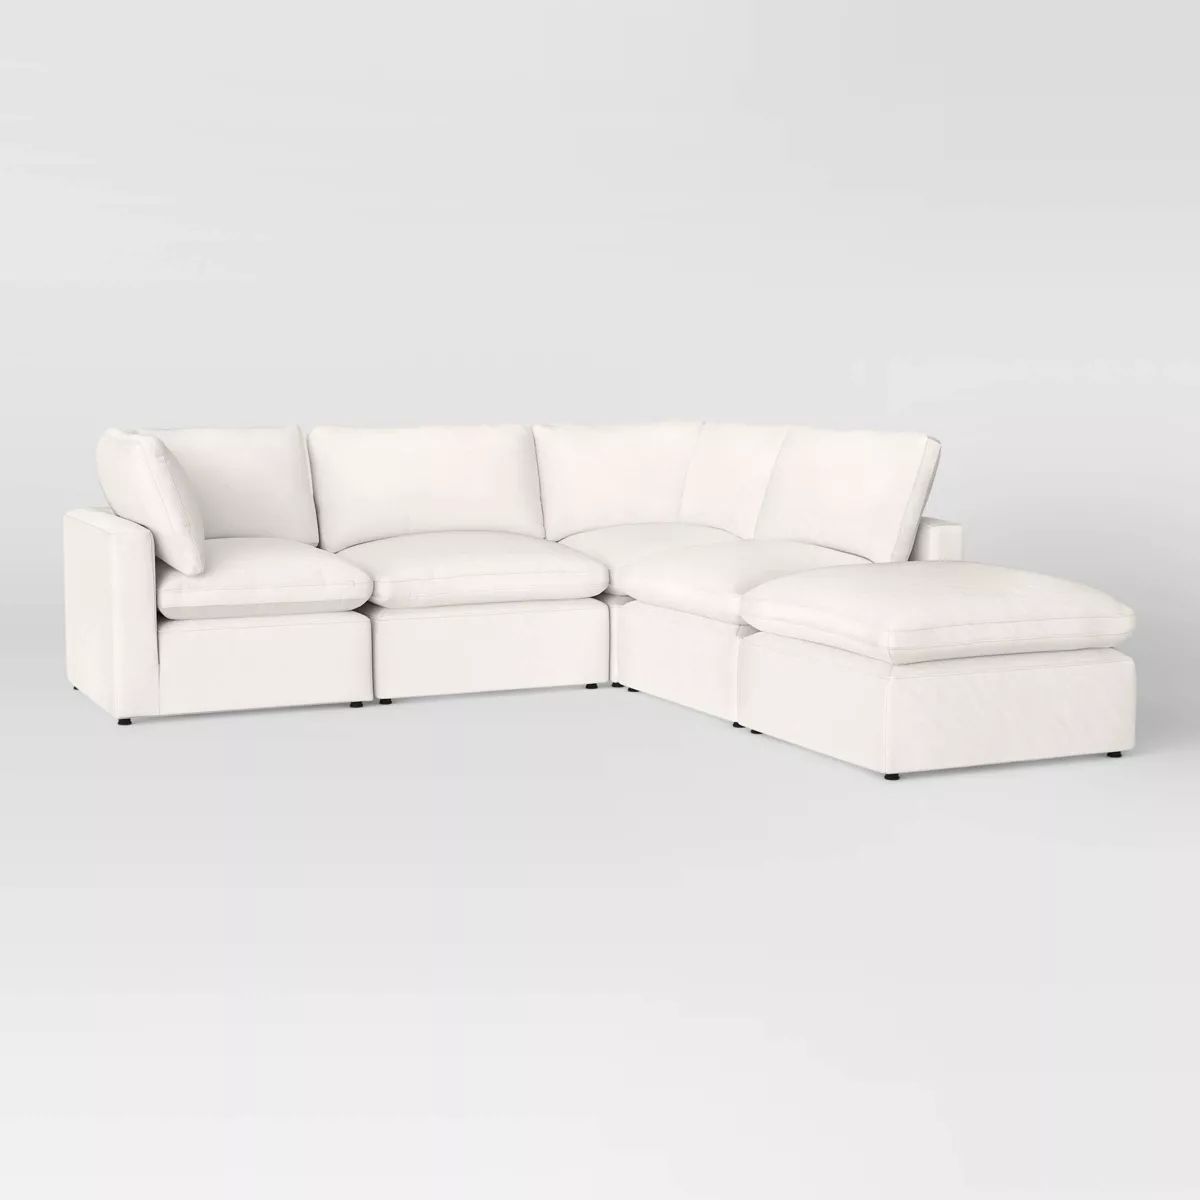 5pc Allandale Modular Sectional Sofa Set - Project 62™ | Target